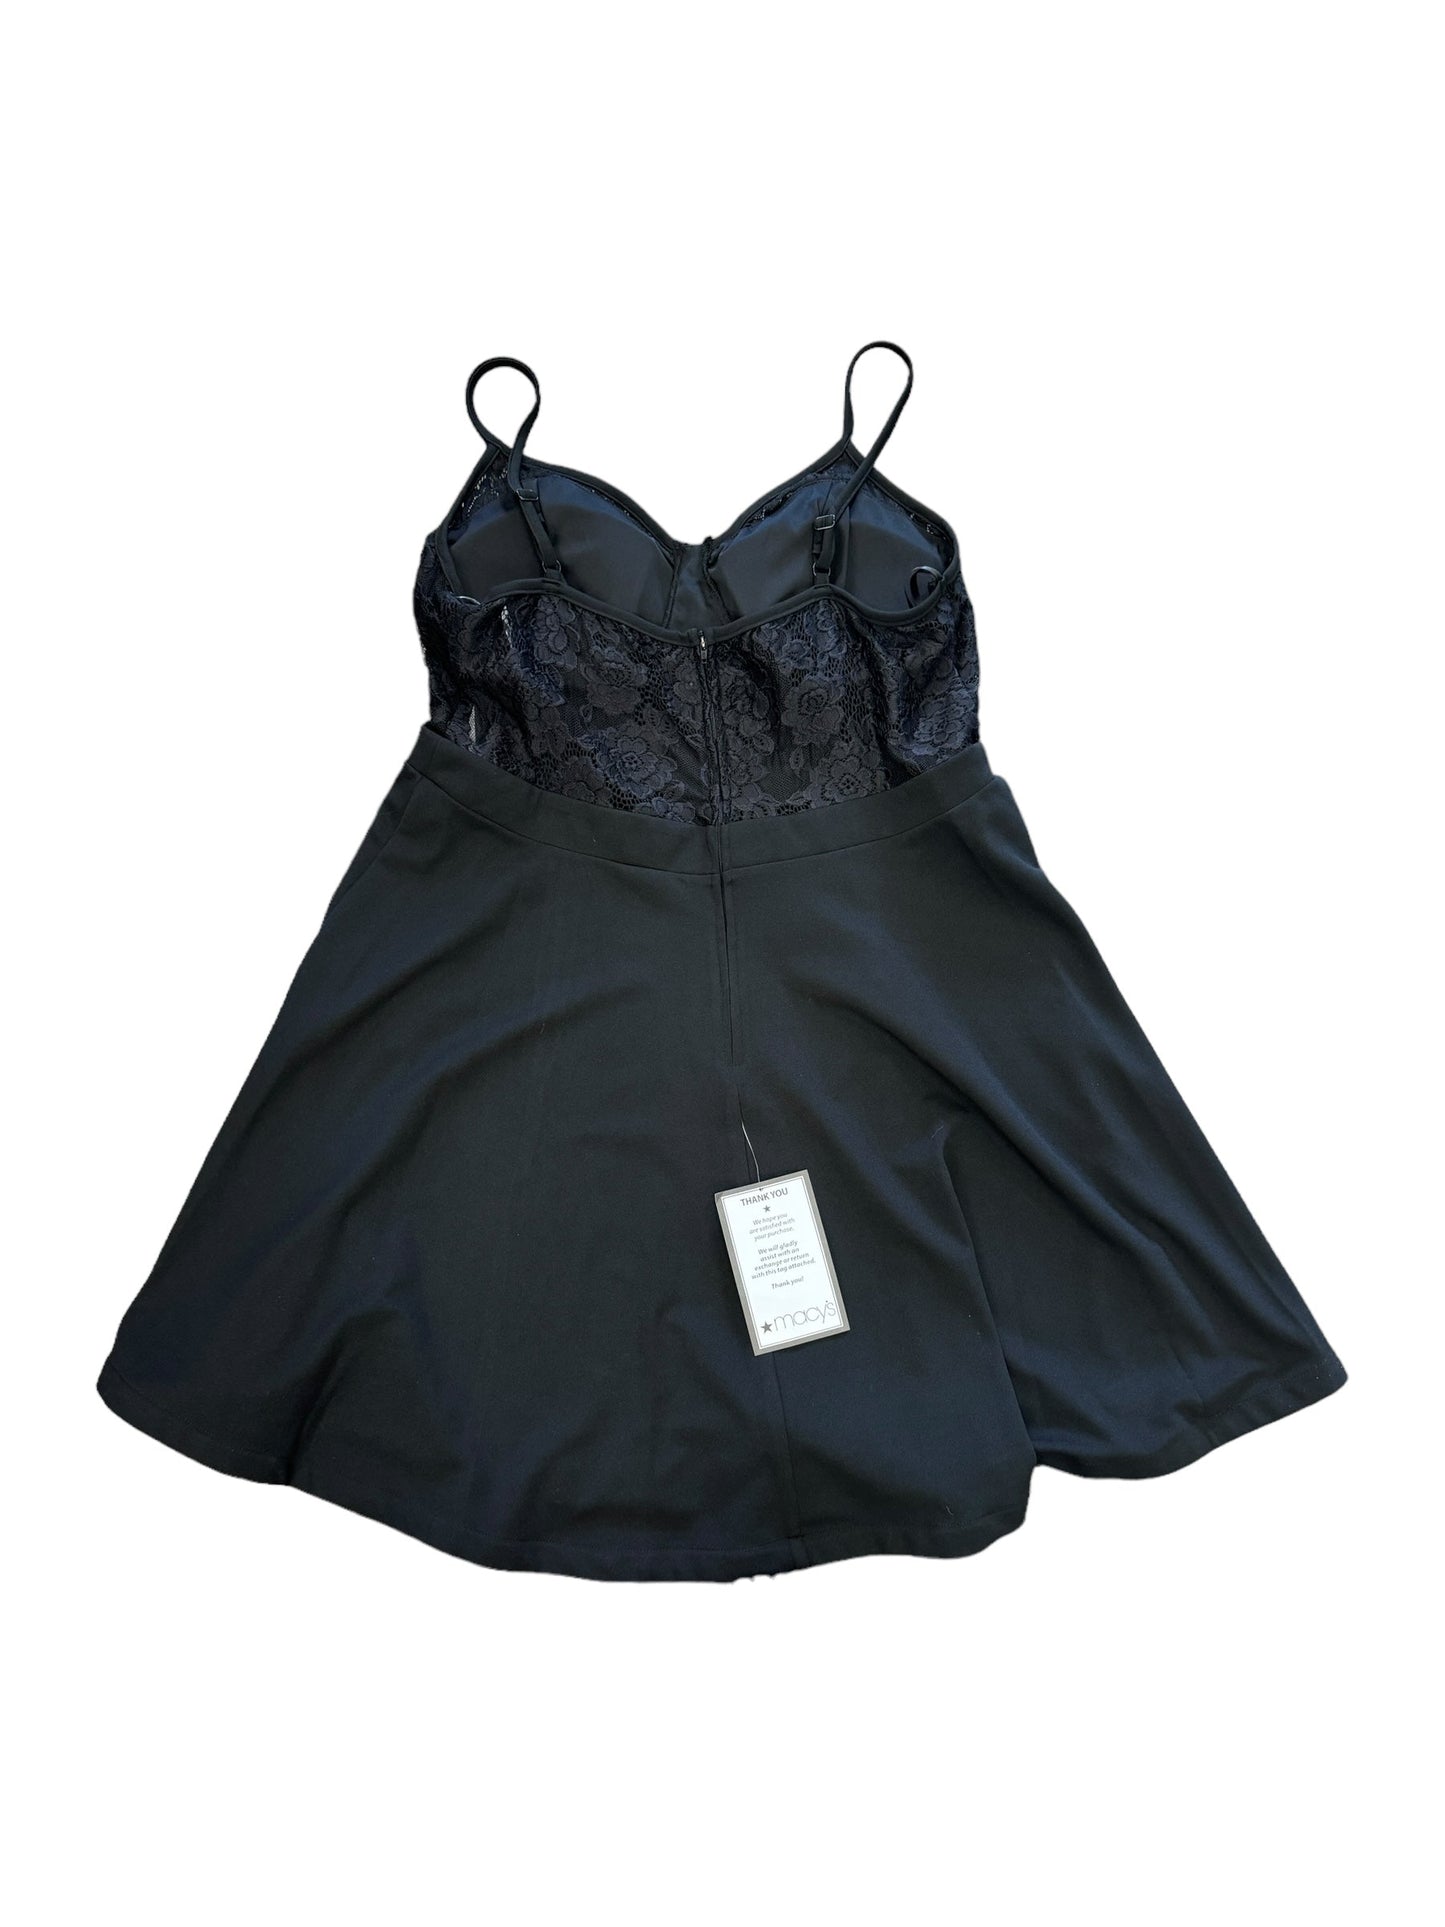 Black Dress Party Short Clothes Mentor, Size 20